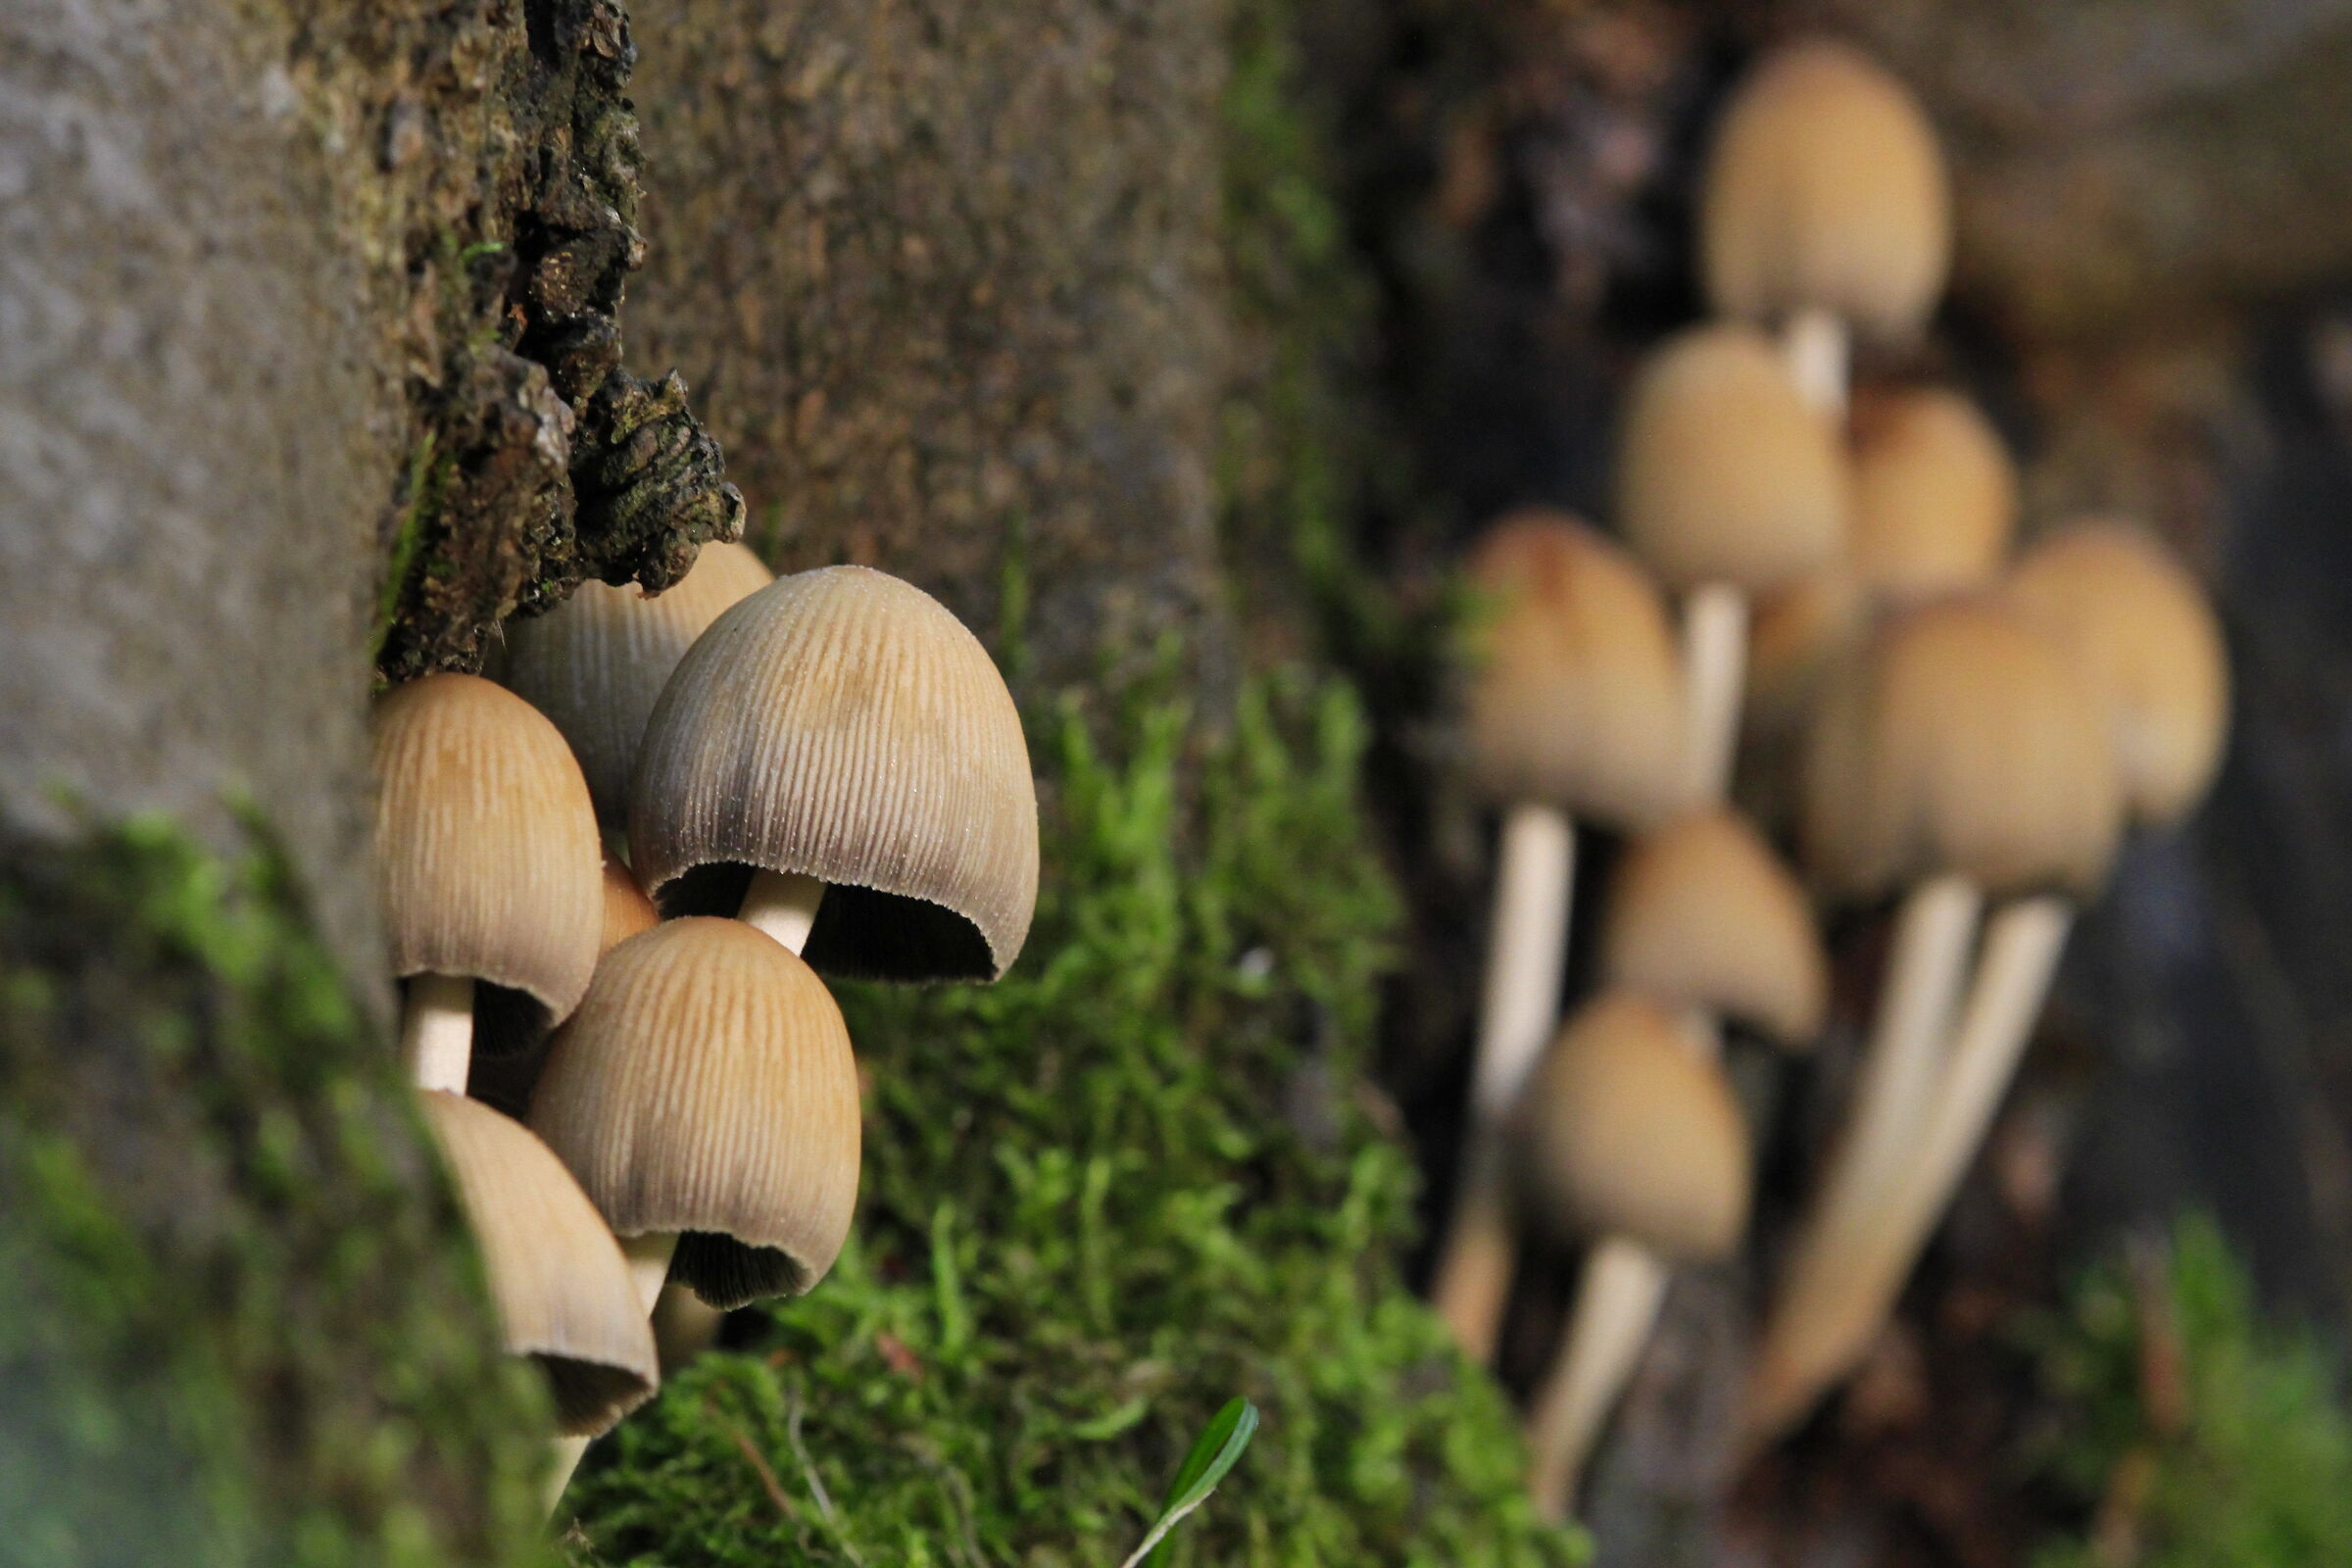 Cheerful mushroom families...